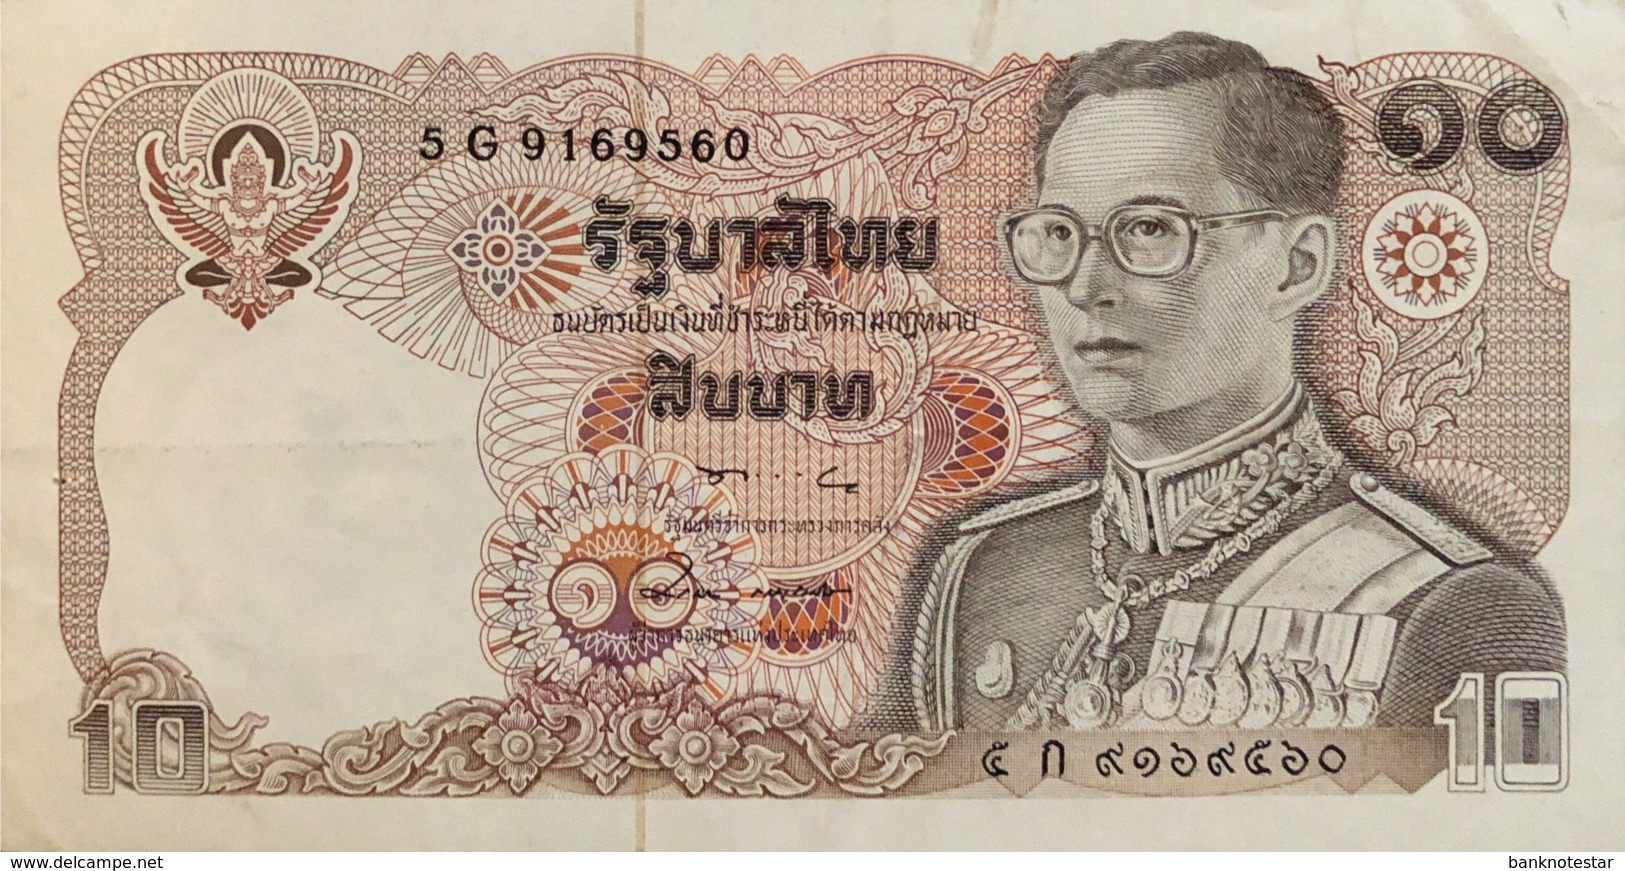 Thailand 10 Bath, P-87 (1980) - Very Fine + - Signature 57 - Thailand